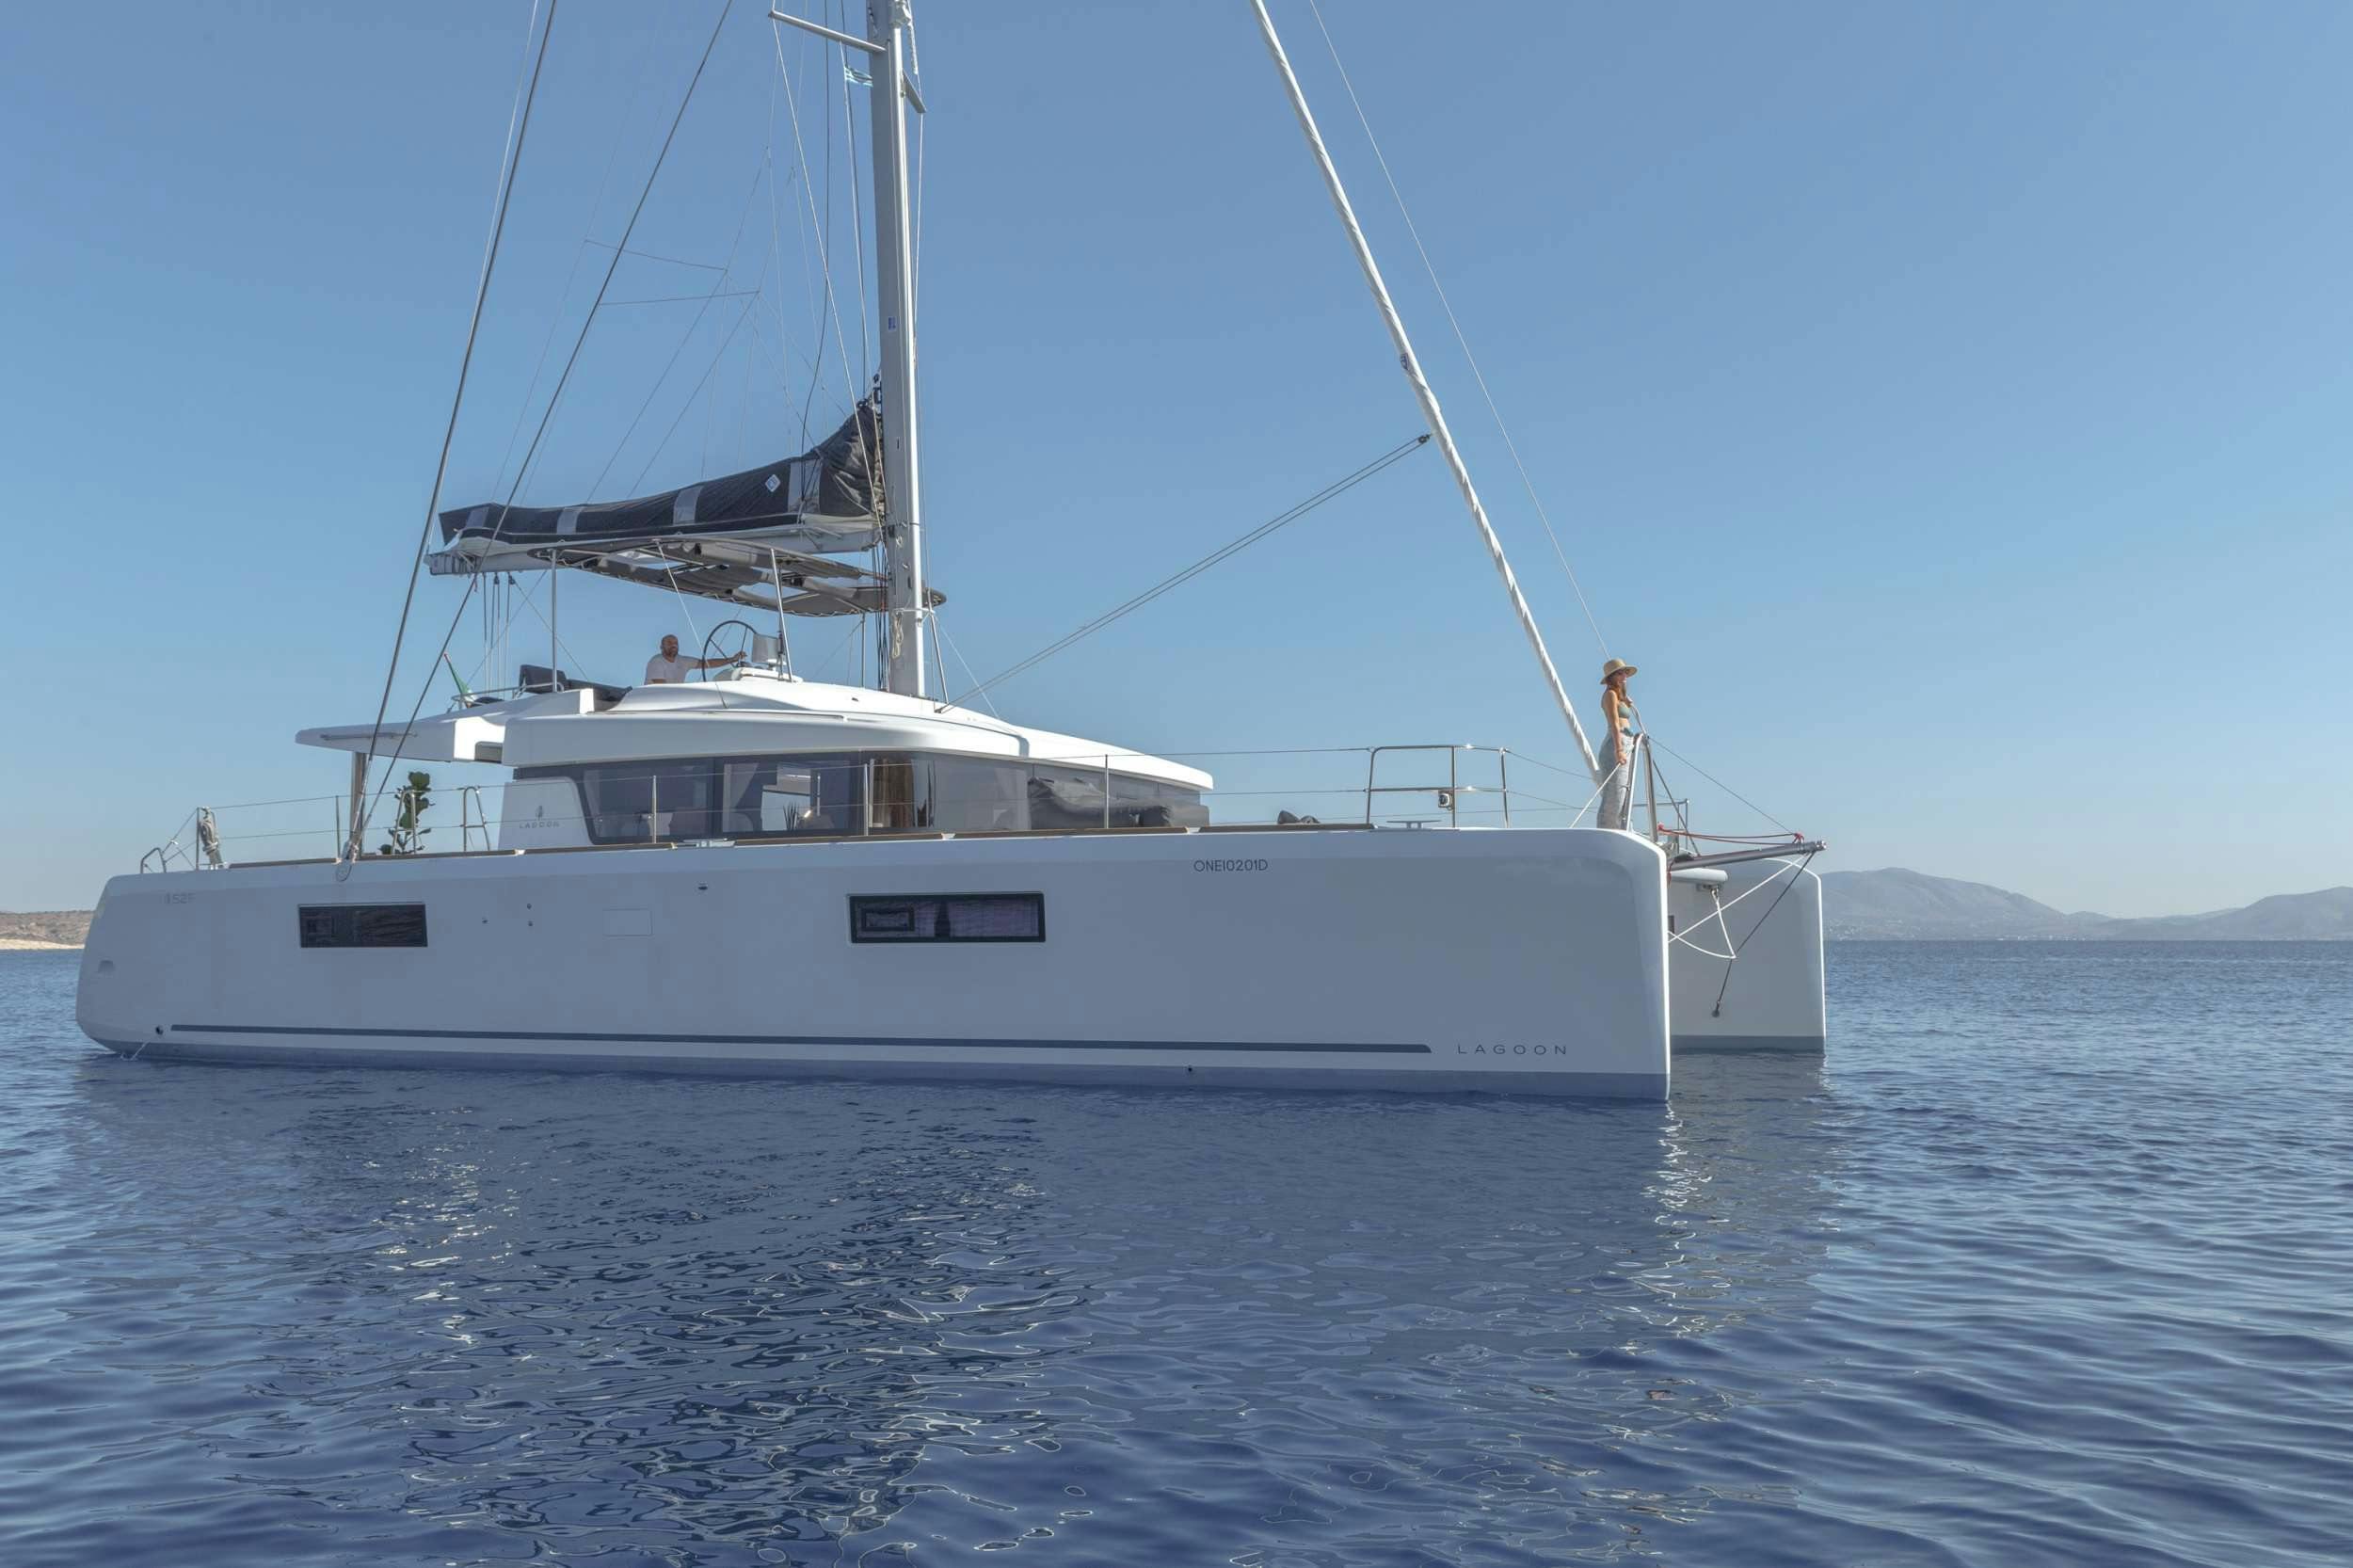 ONEIDA - Yacht Charter St Katherine's Docks & Boat hire in Greece 1